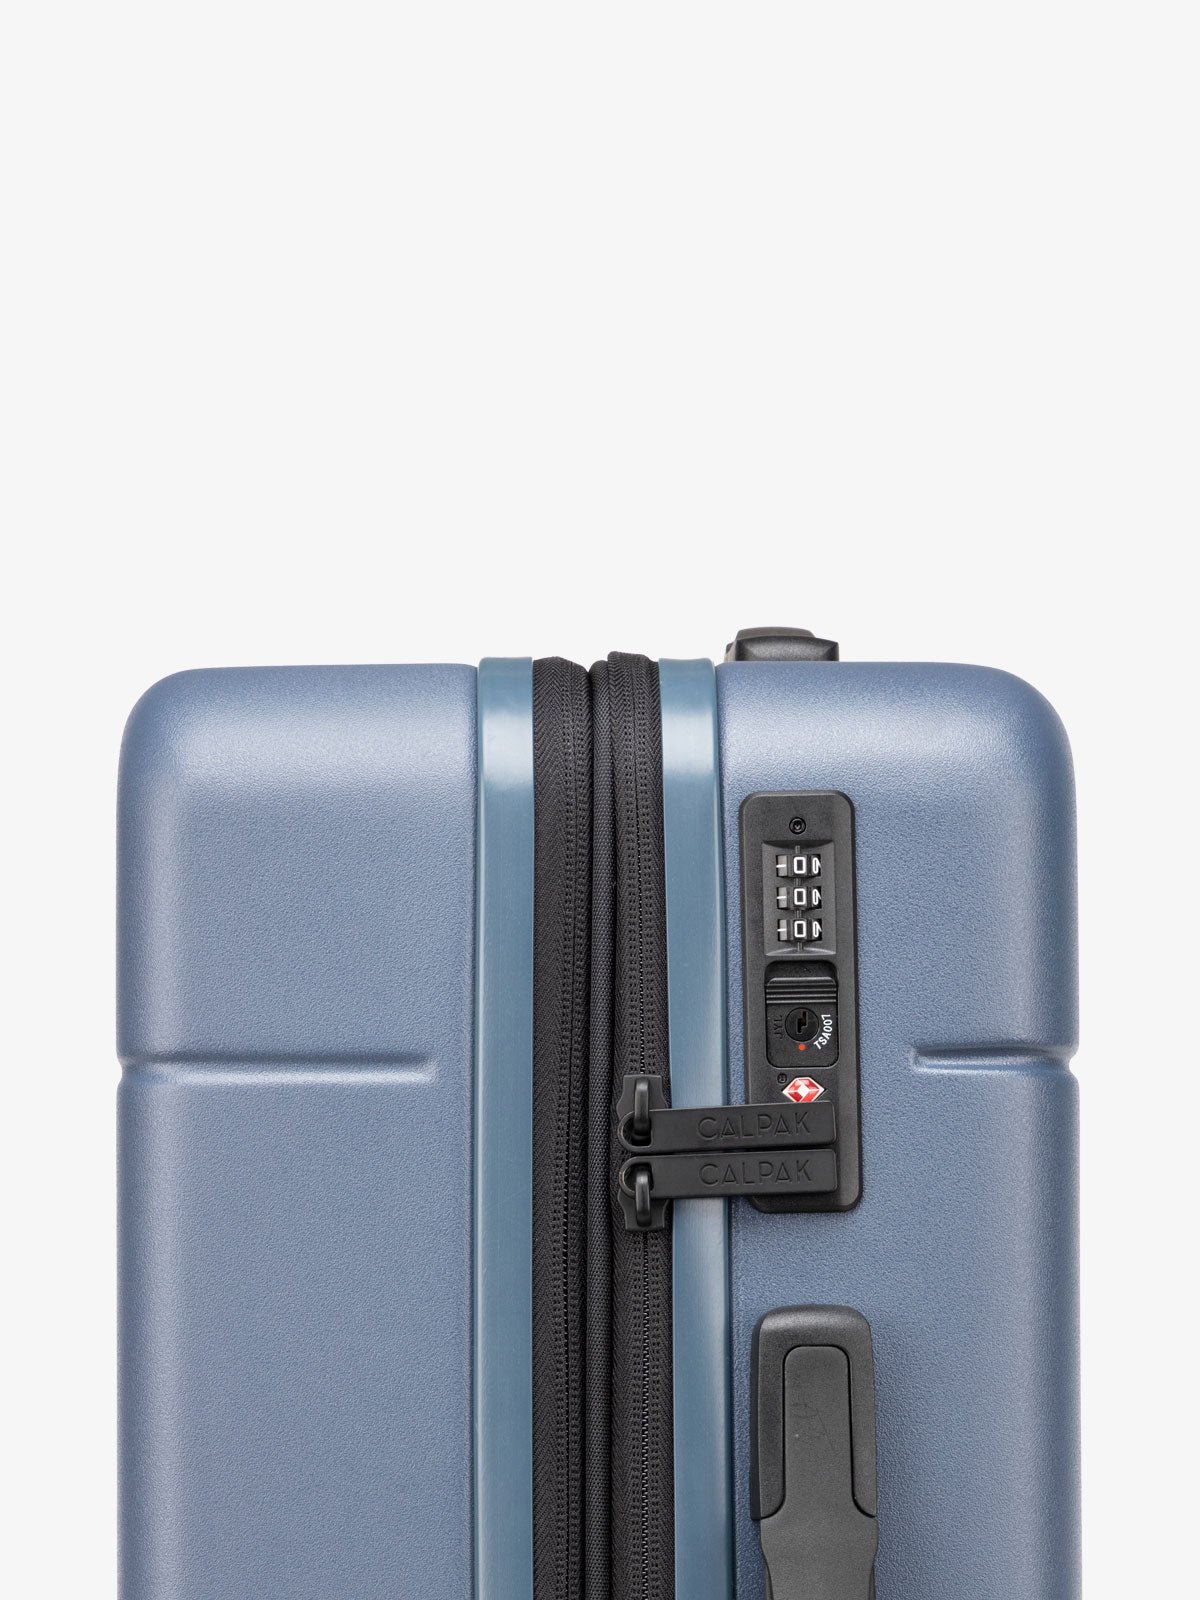 large blue atlantic CALPAK Hue checked luggage with built-in TSA lock